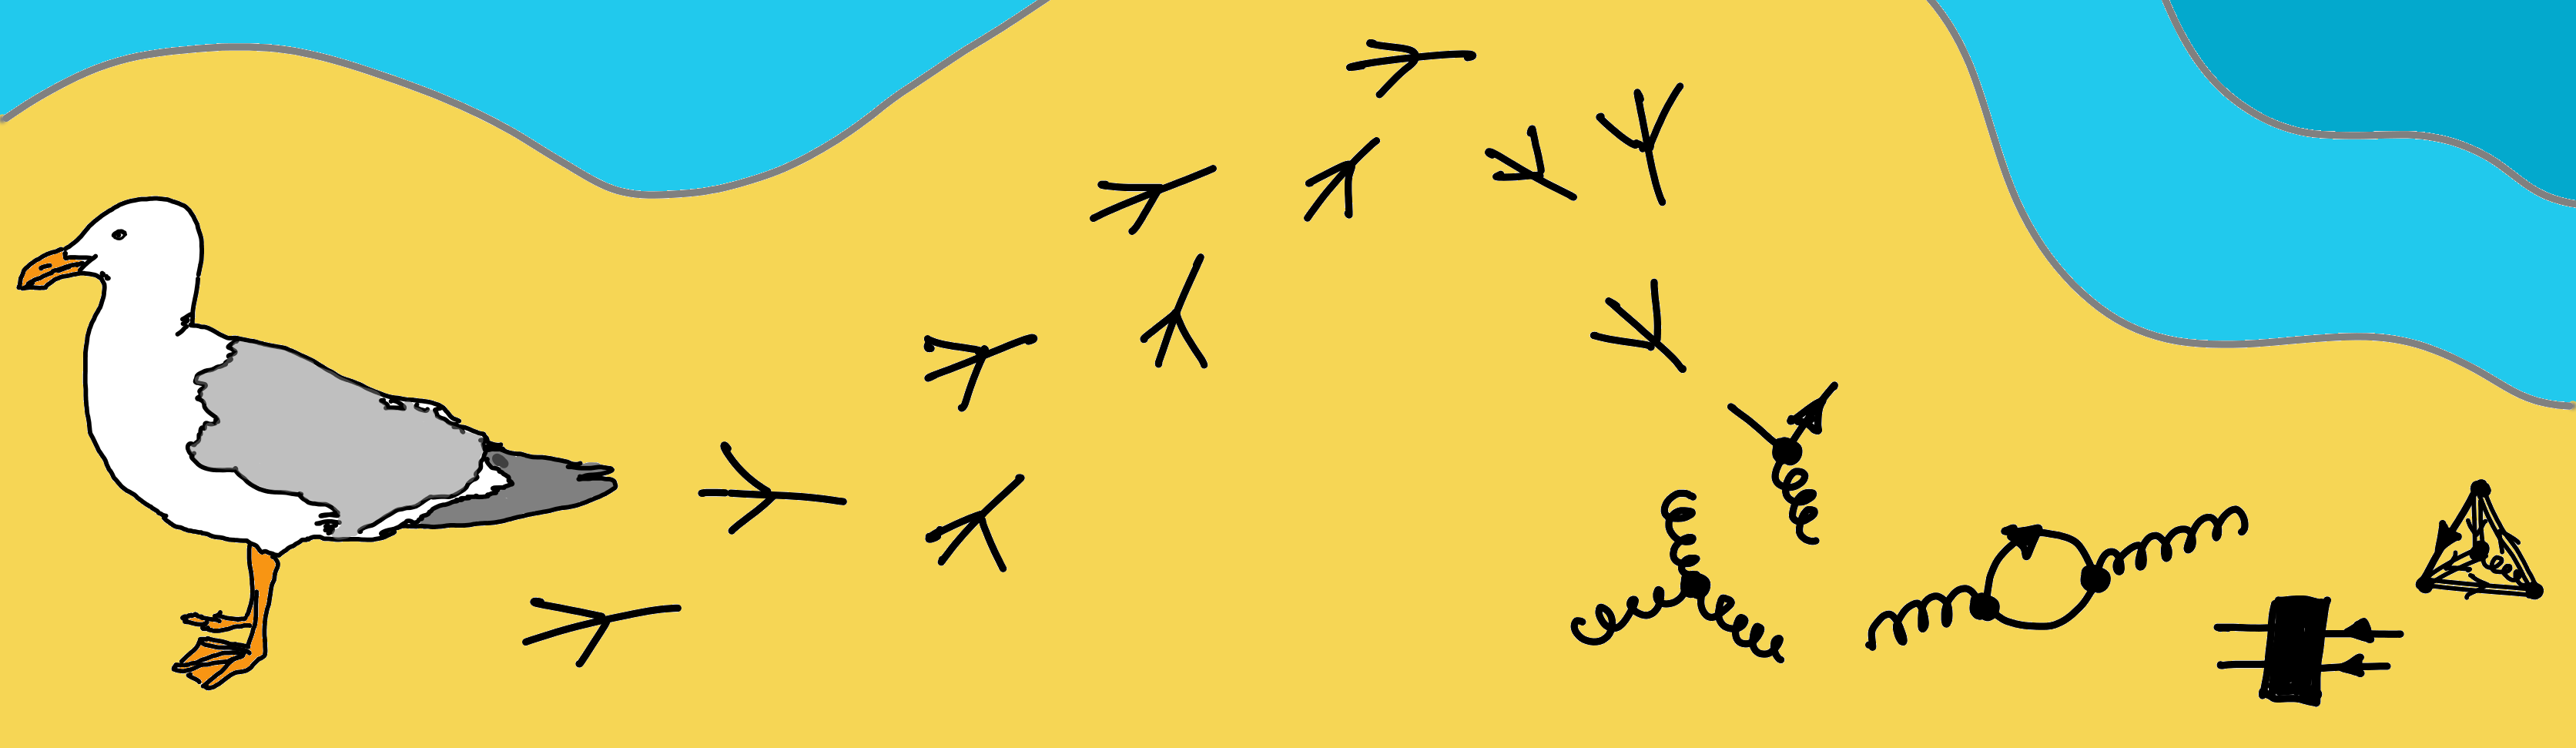 drawing: birdtrack diagrams and "real" birdtracks at a beach